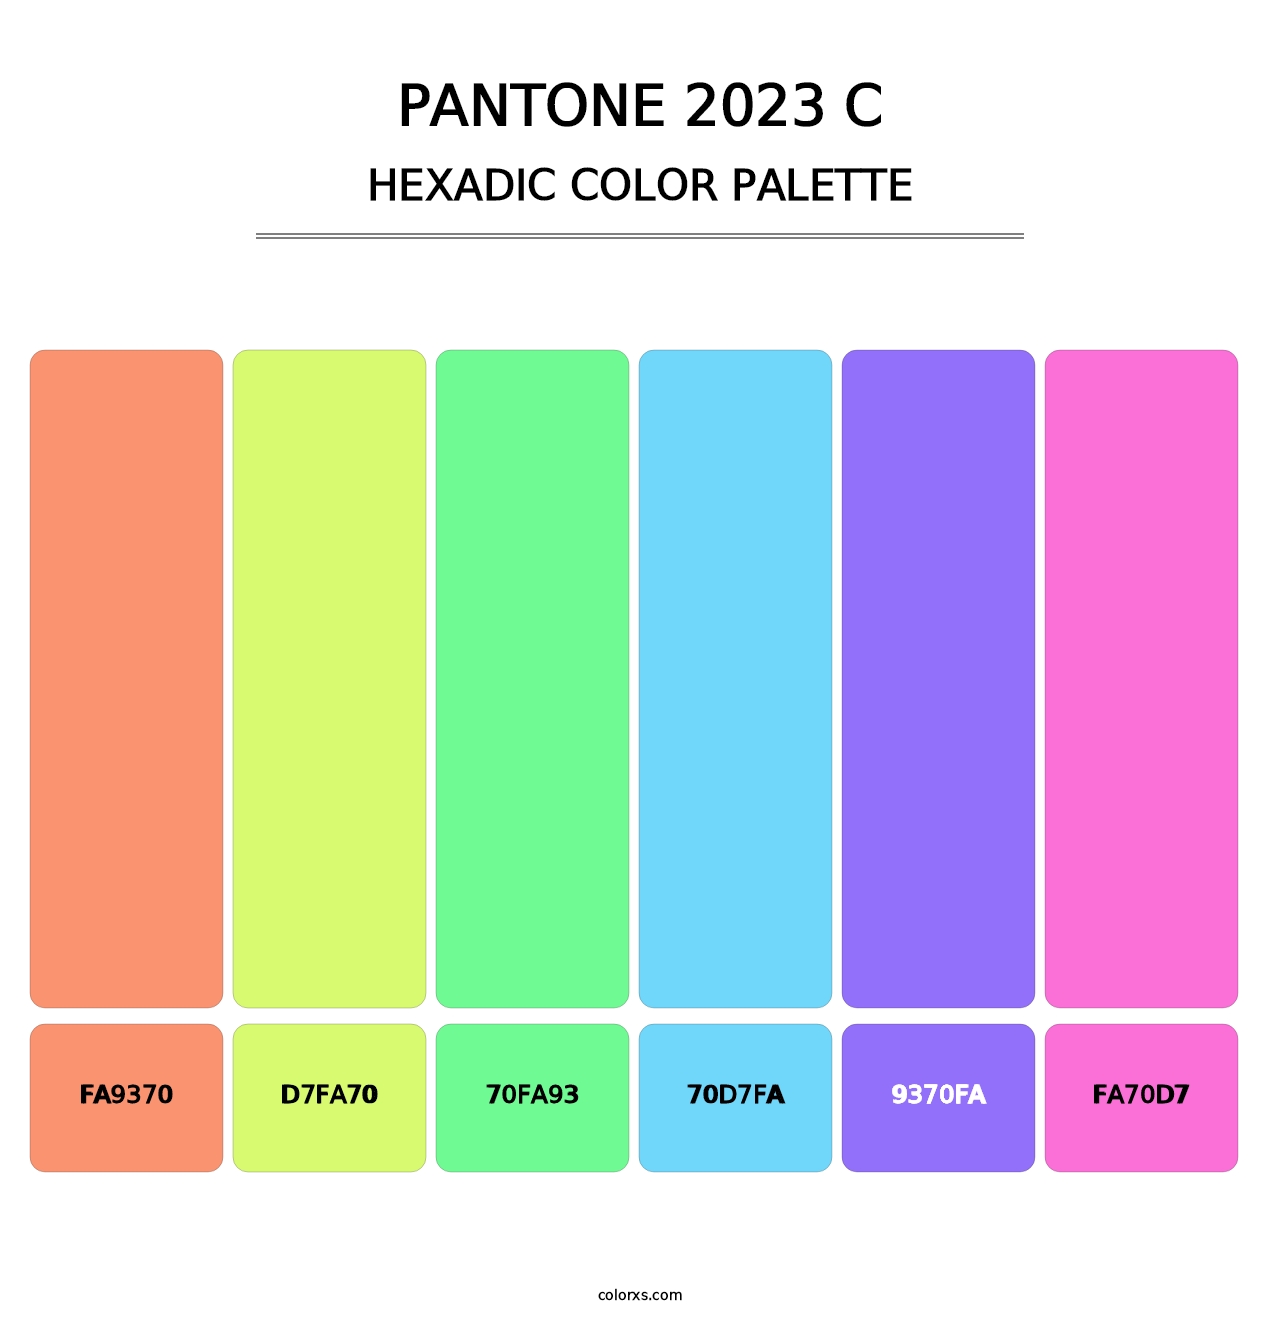 PANTONE 2023 C - Hexadic Color Palette